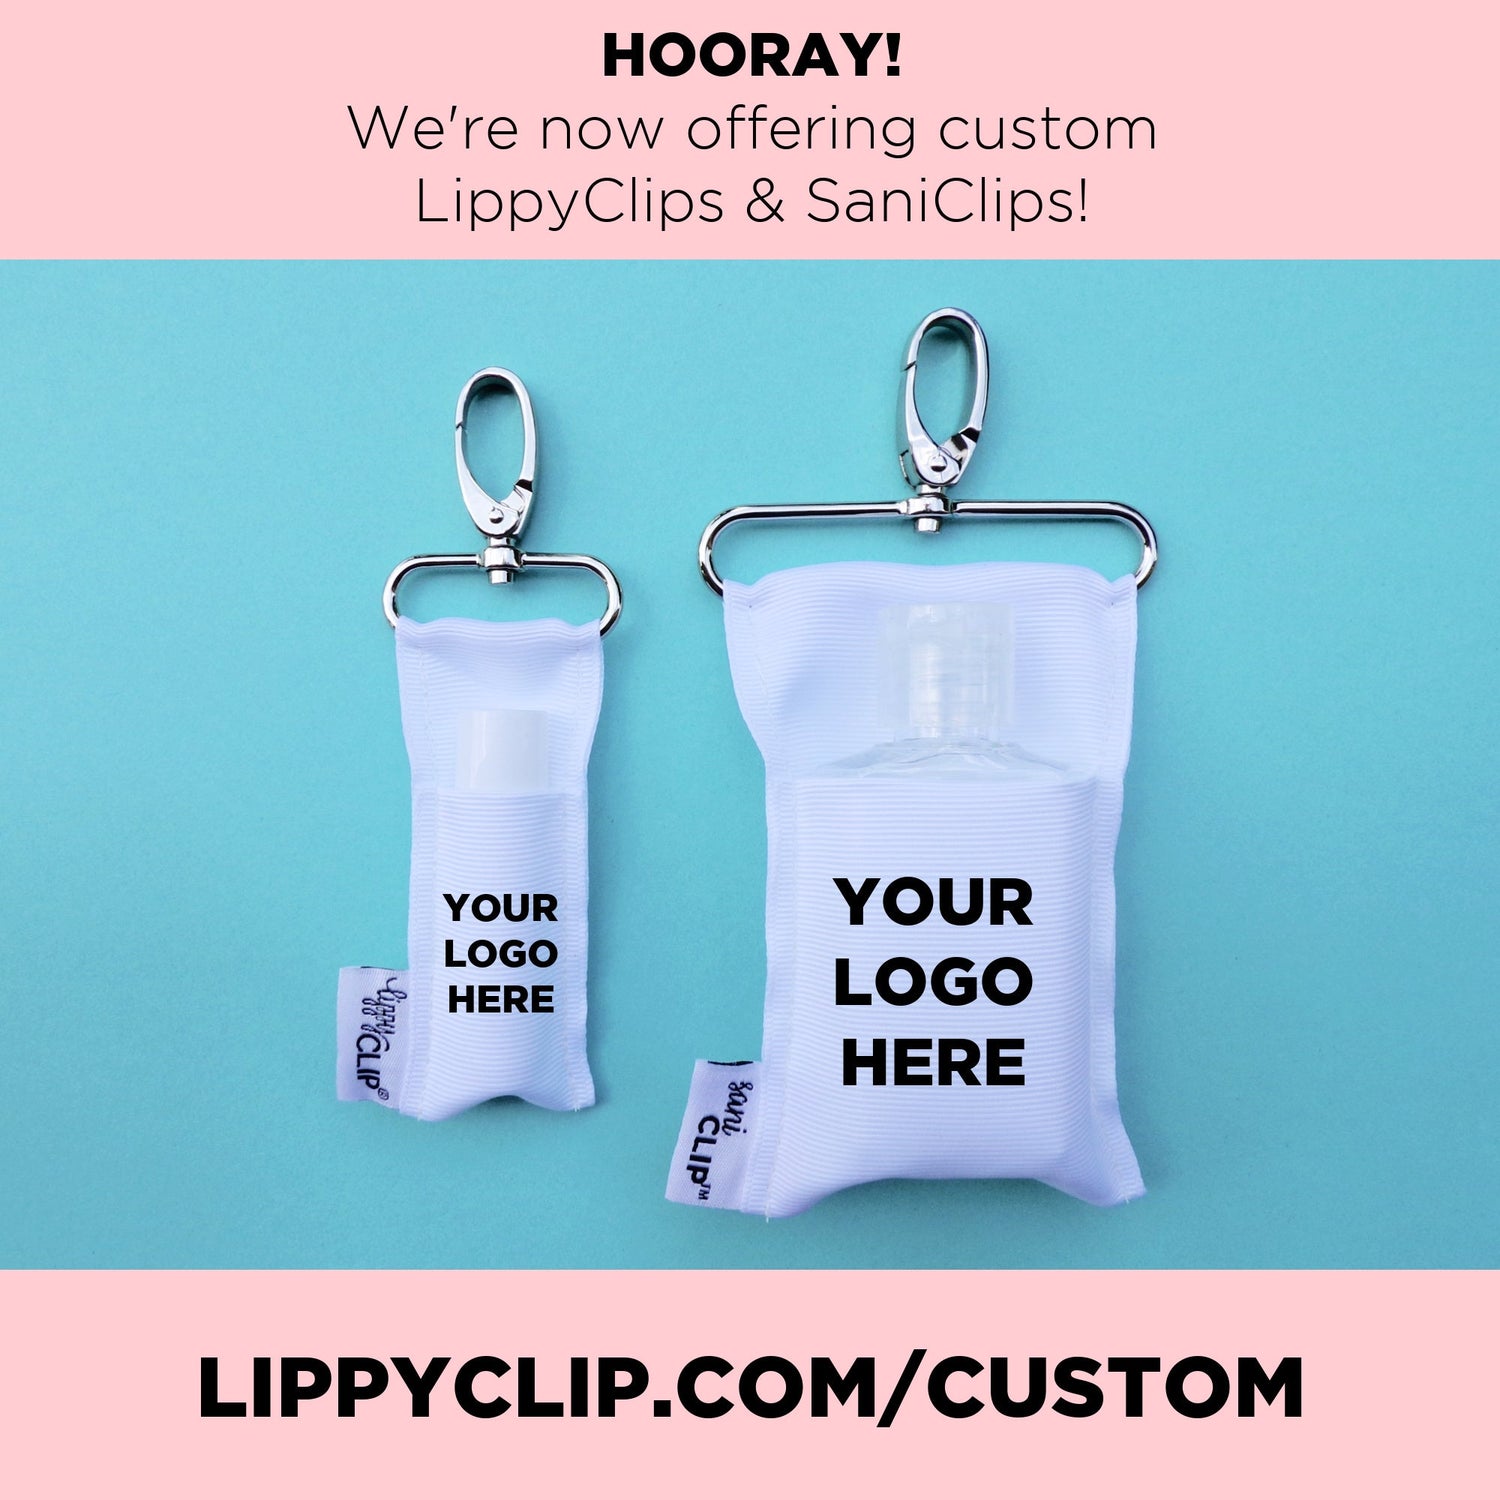 Custom Printed LippyClips or SaniClips